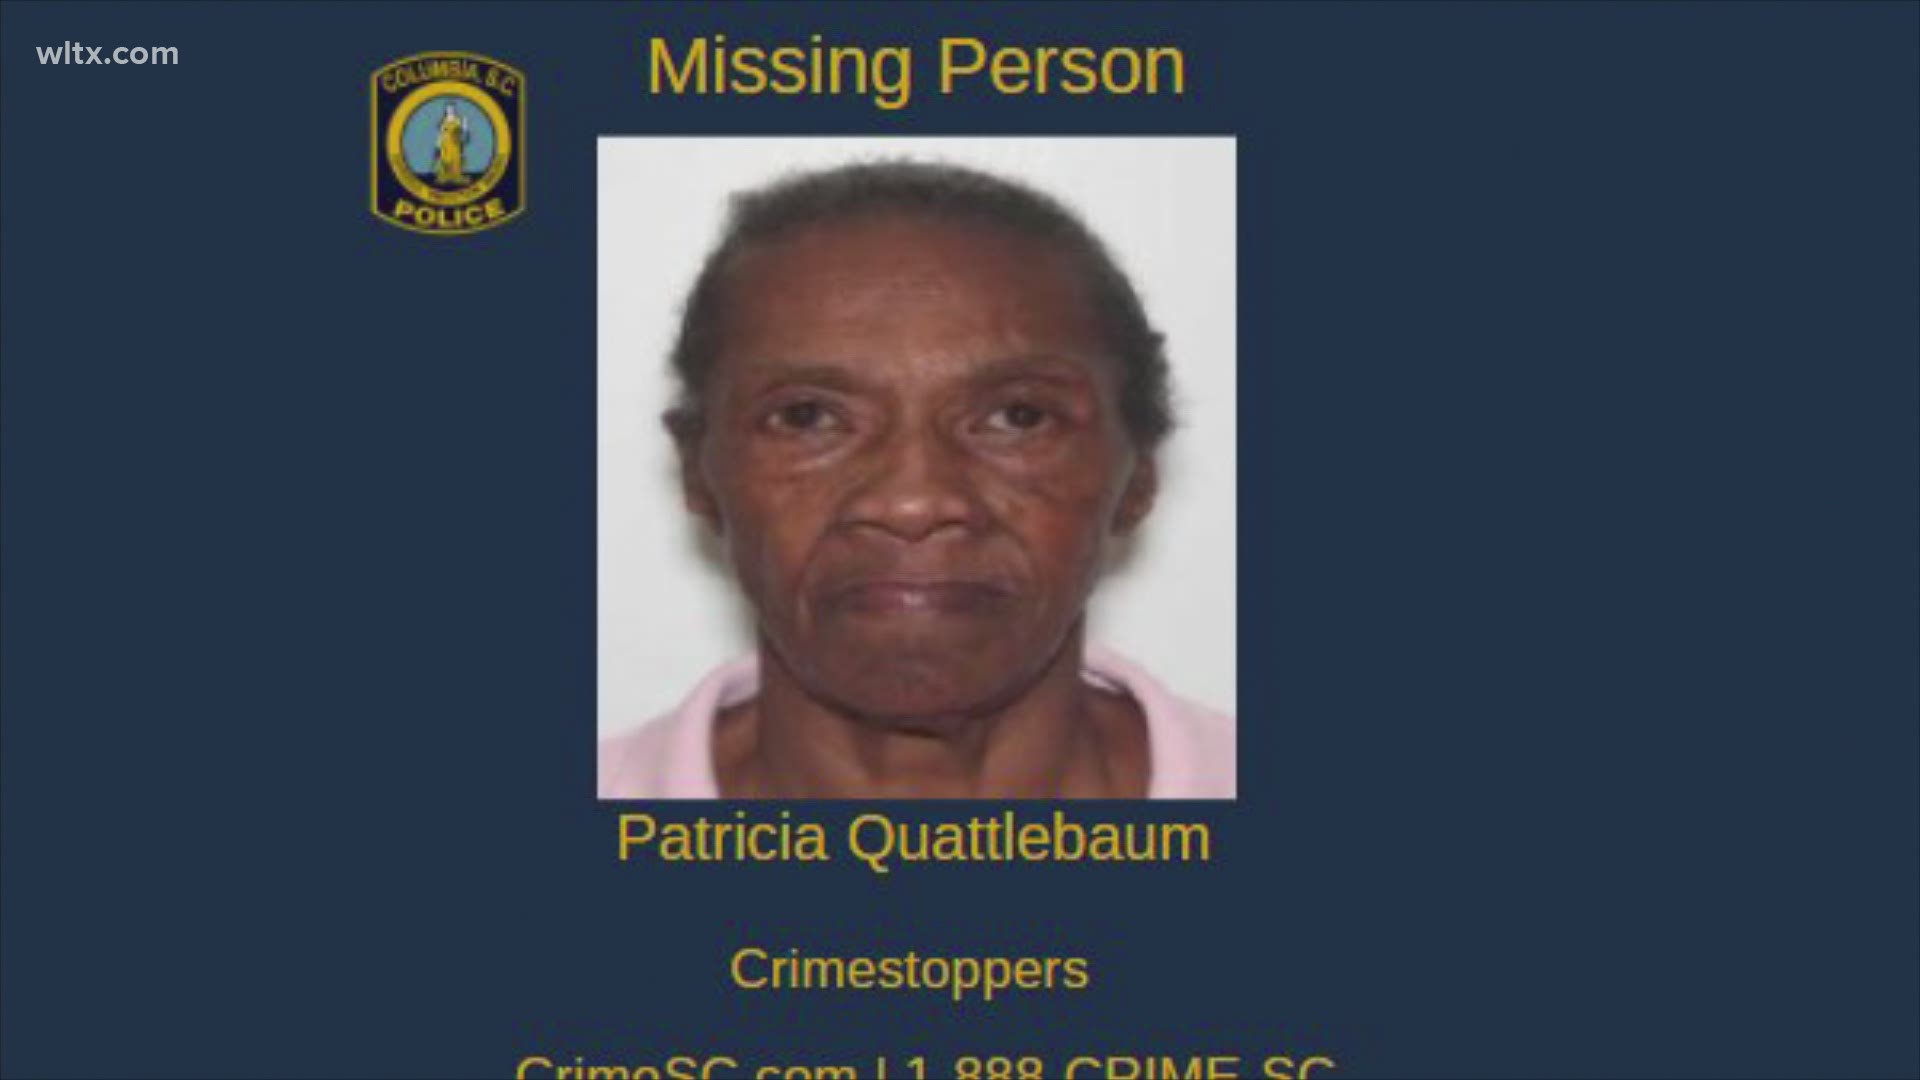 Patricia Quattlebaum, 72, walked away from a Columbia hospital around 1 p.m. Tuesday.